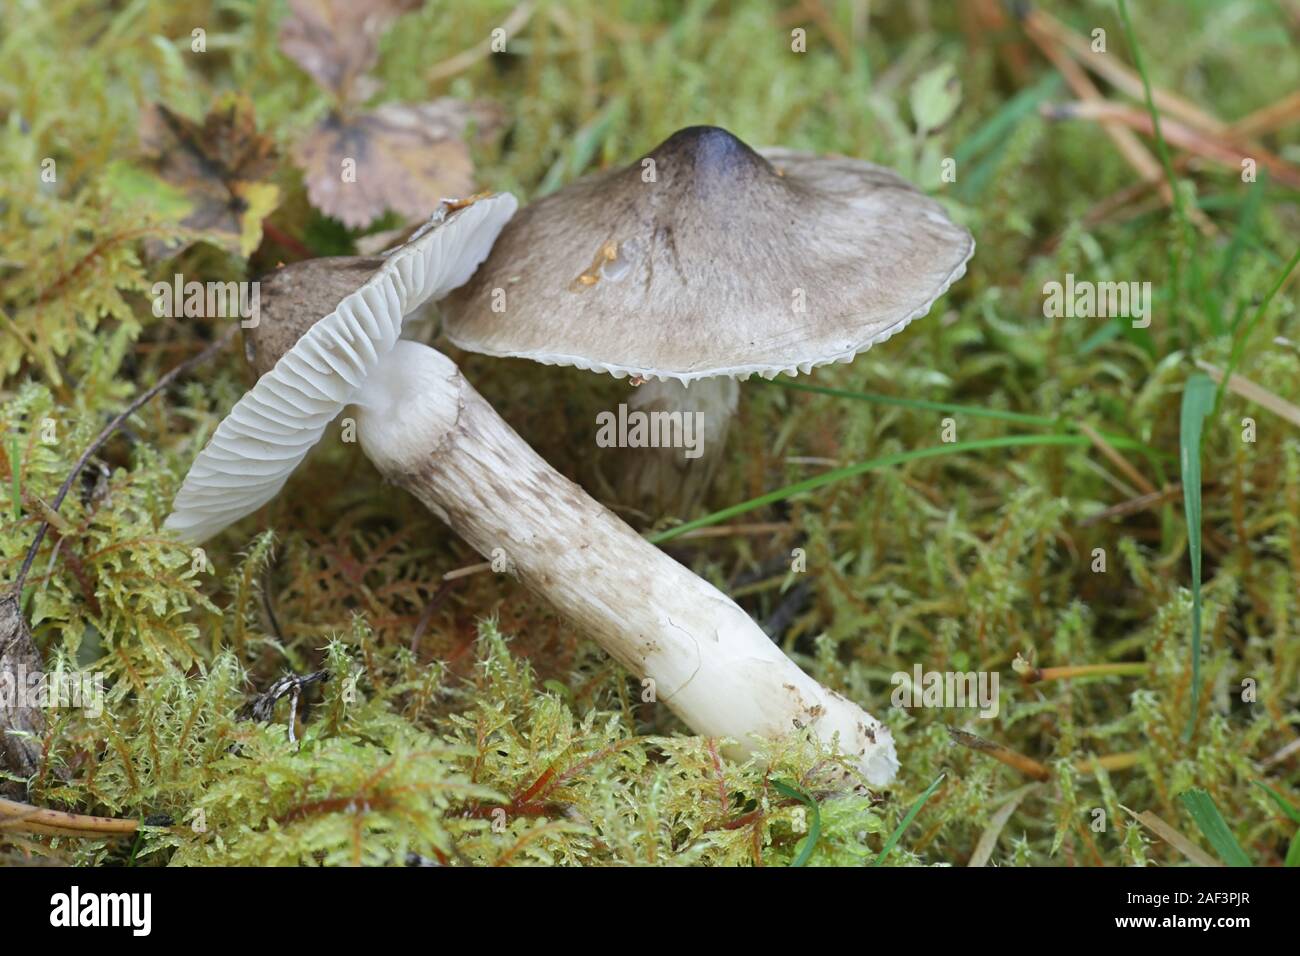 Hygrophorus korhonenii, woodwax or waxy cap mushrooms from Finland Stock Photo